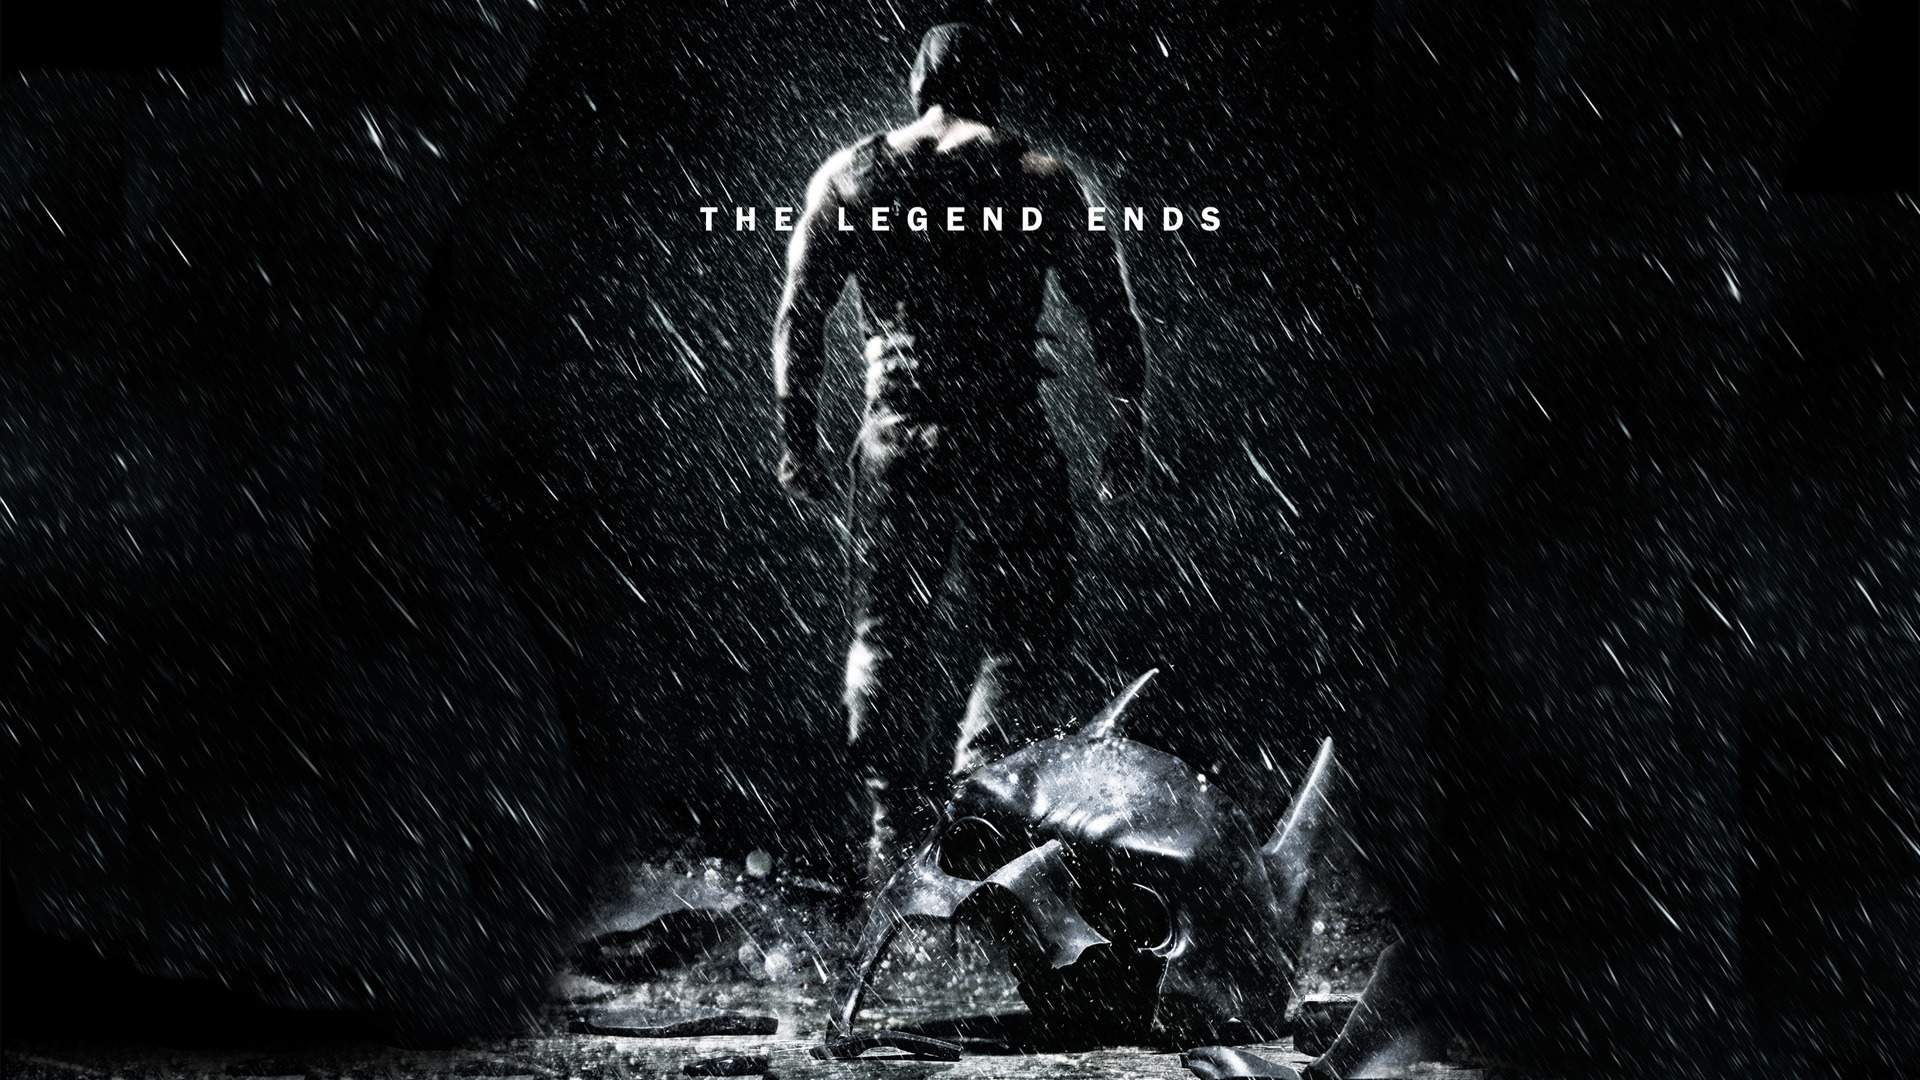 The Dark Knight Rises 2012 for 1920 x 1080 HDTV 1080p resolution